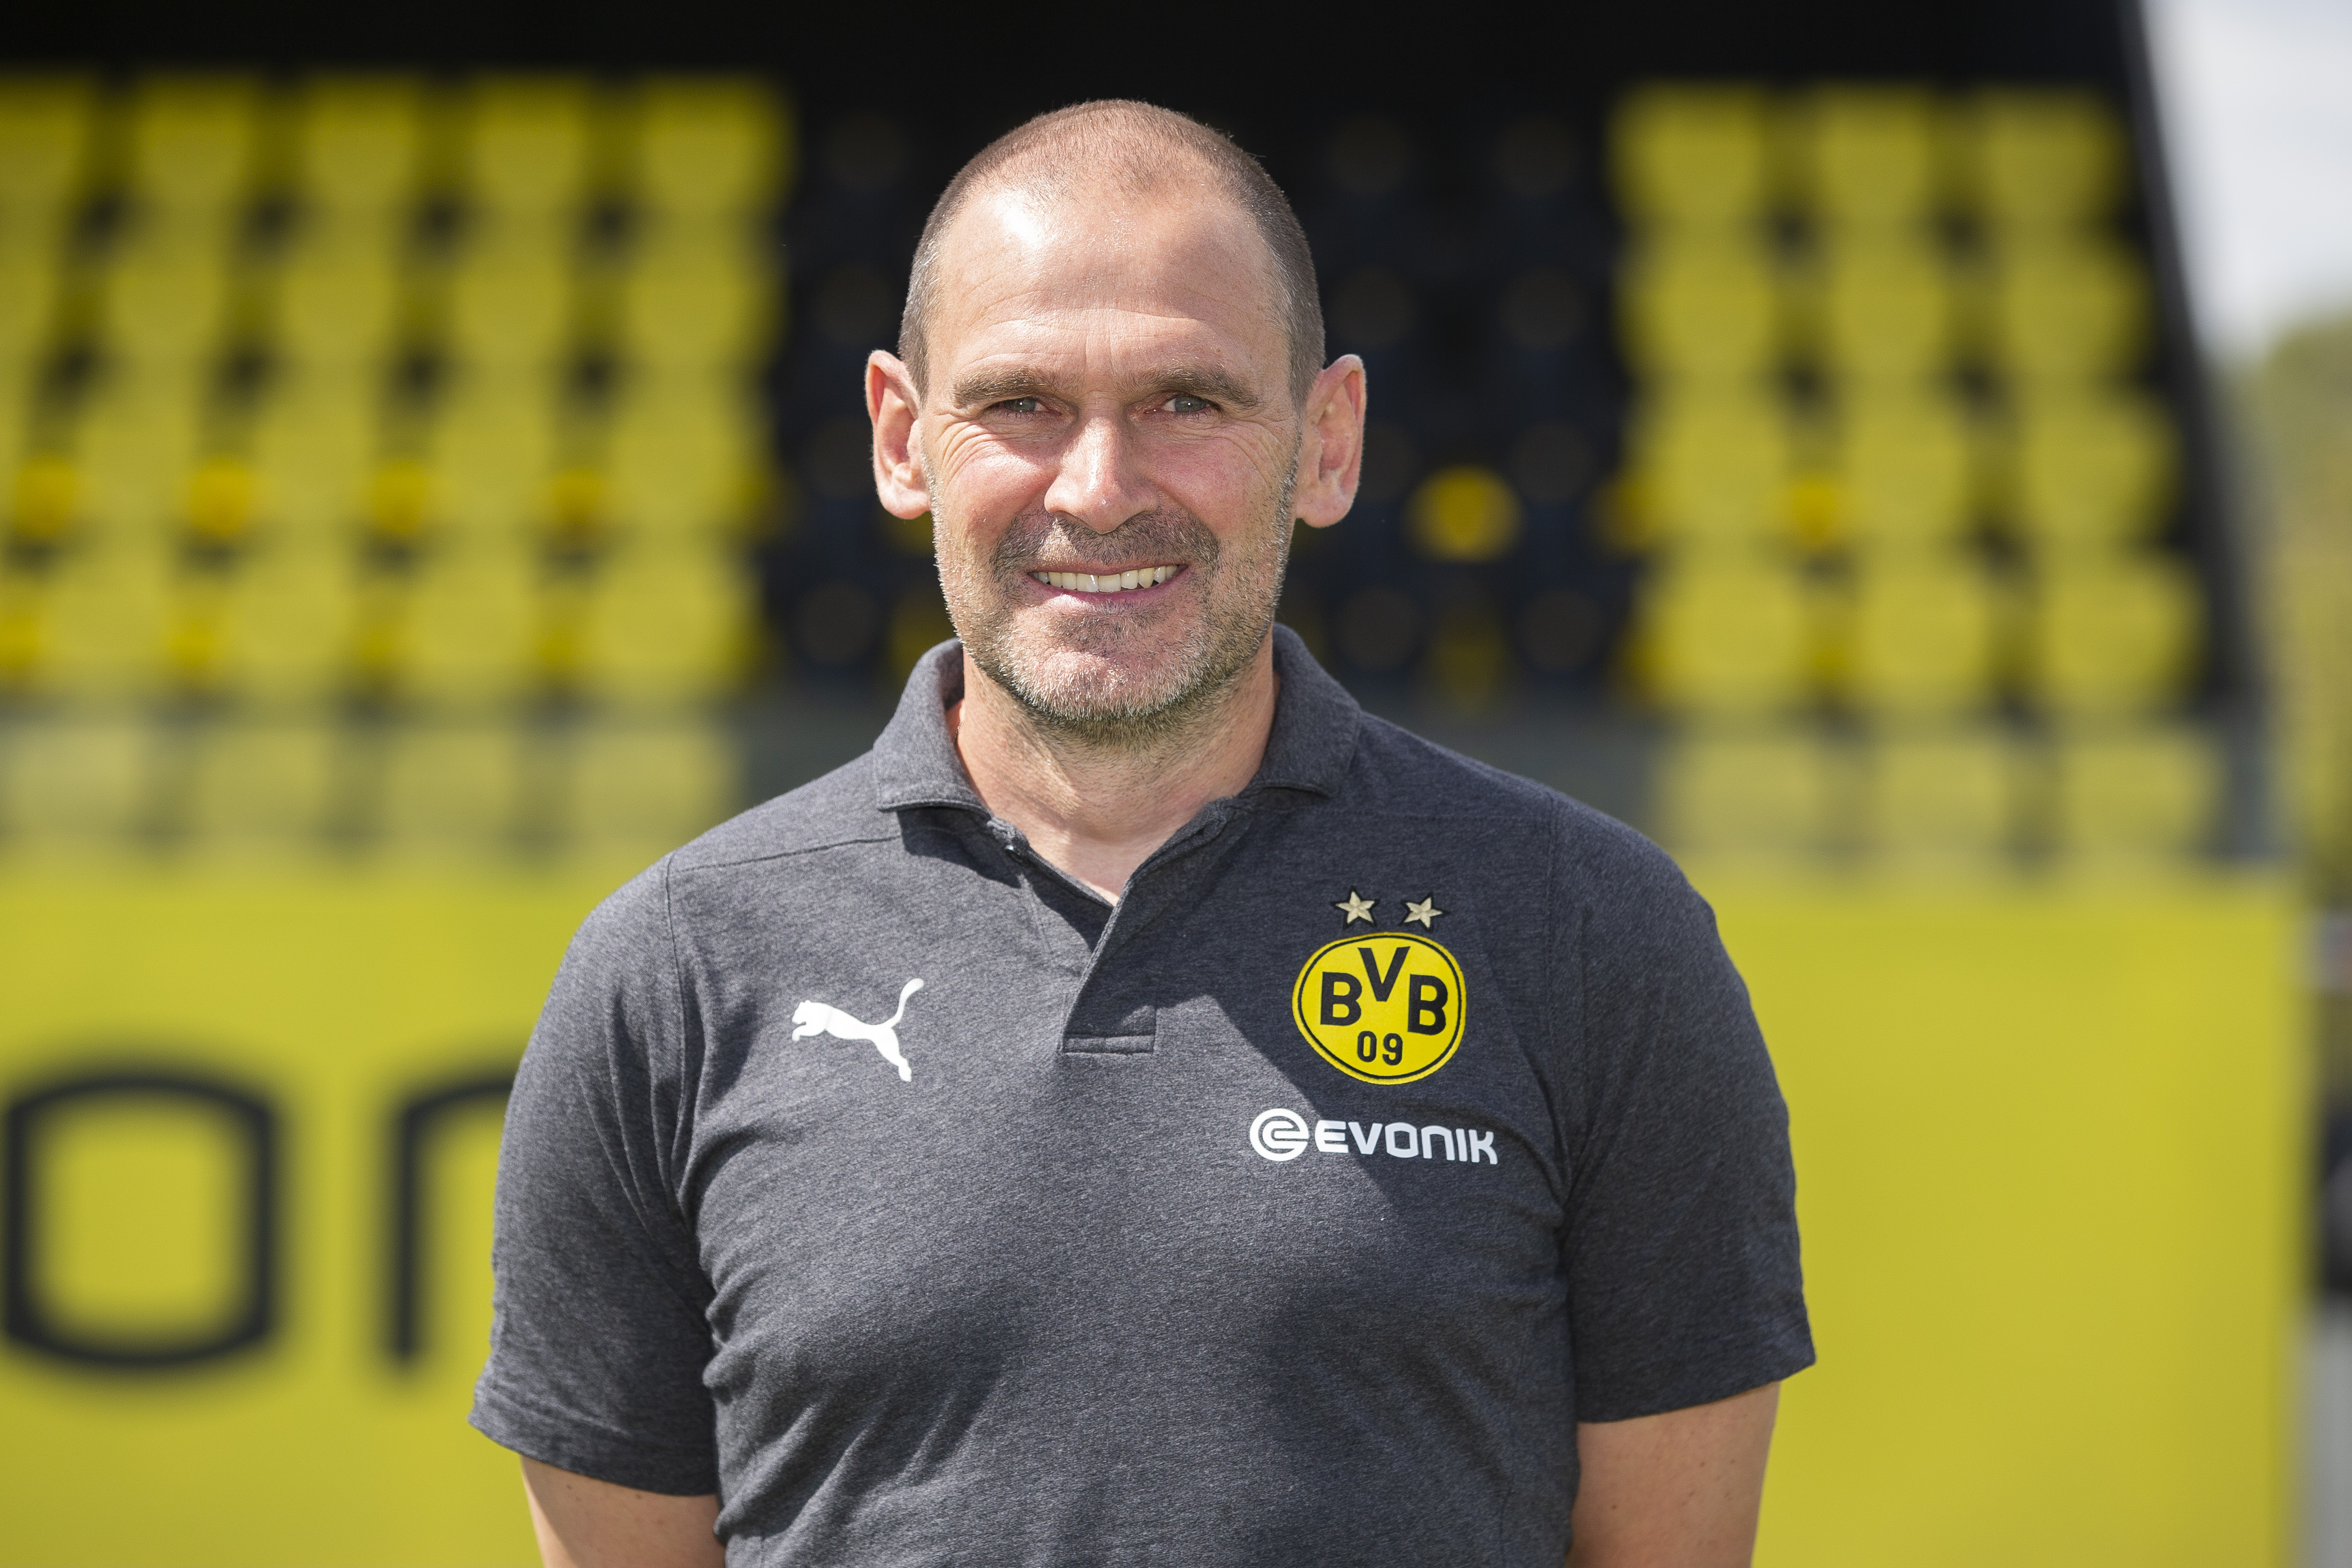 Co Trainer Dortmund